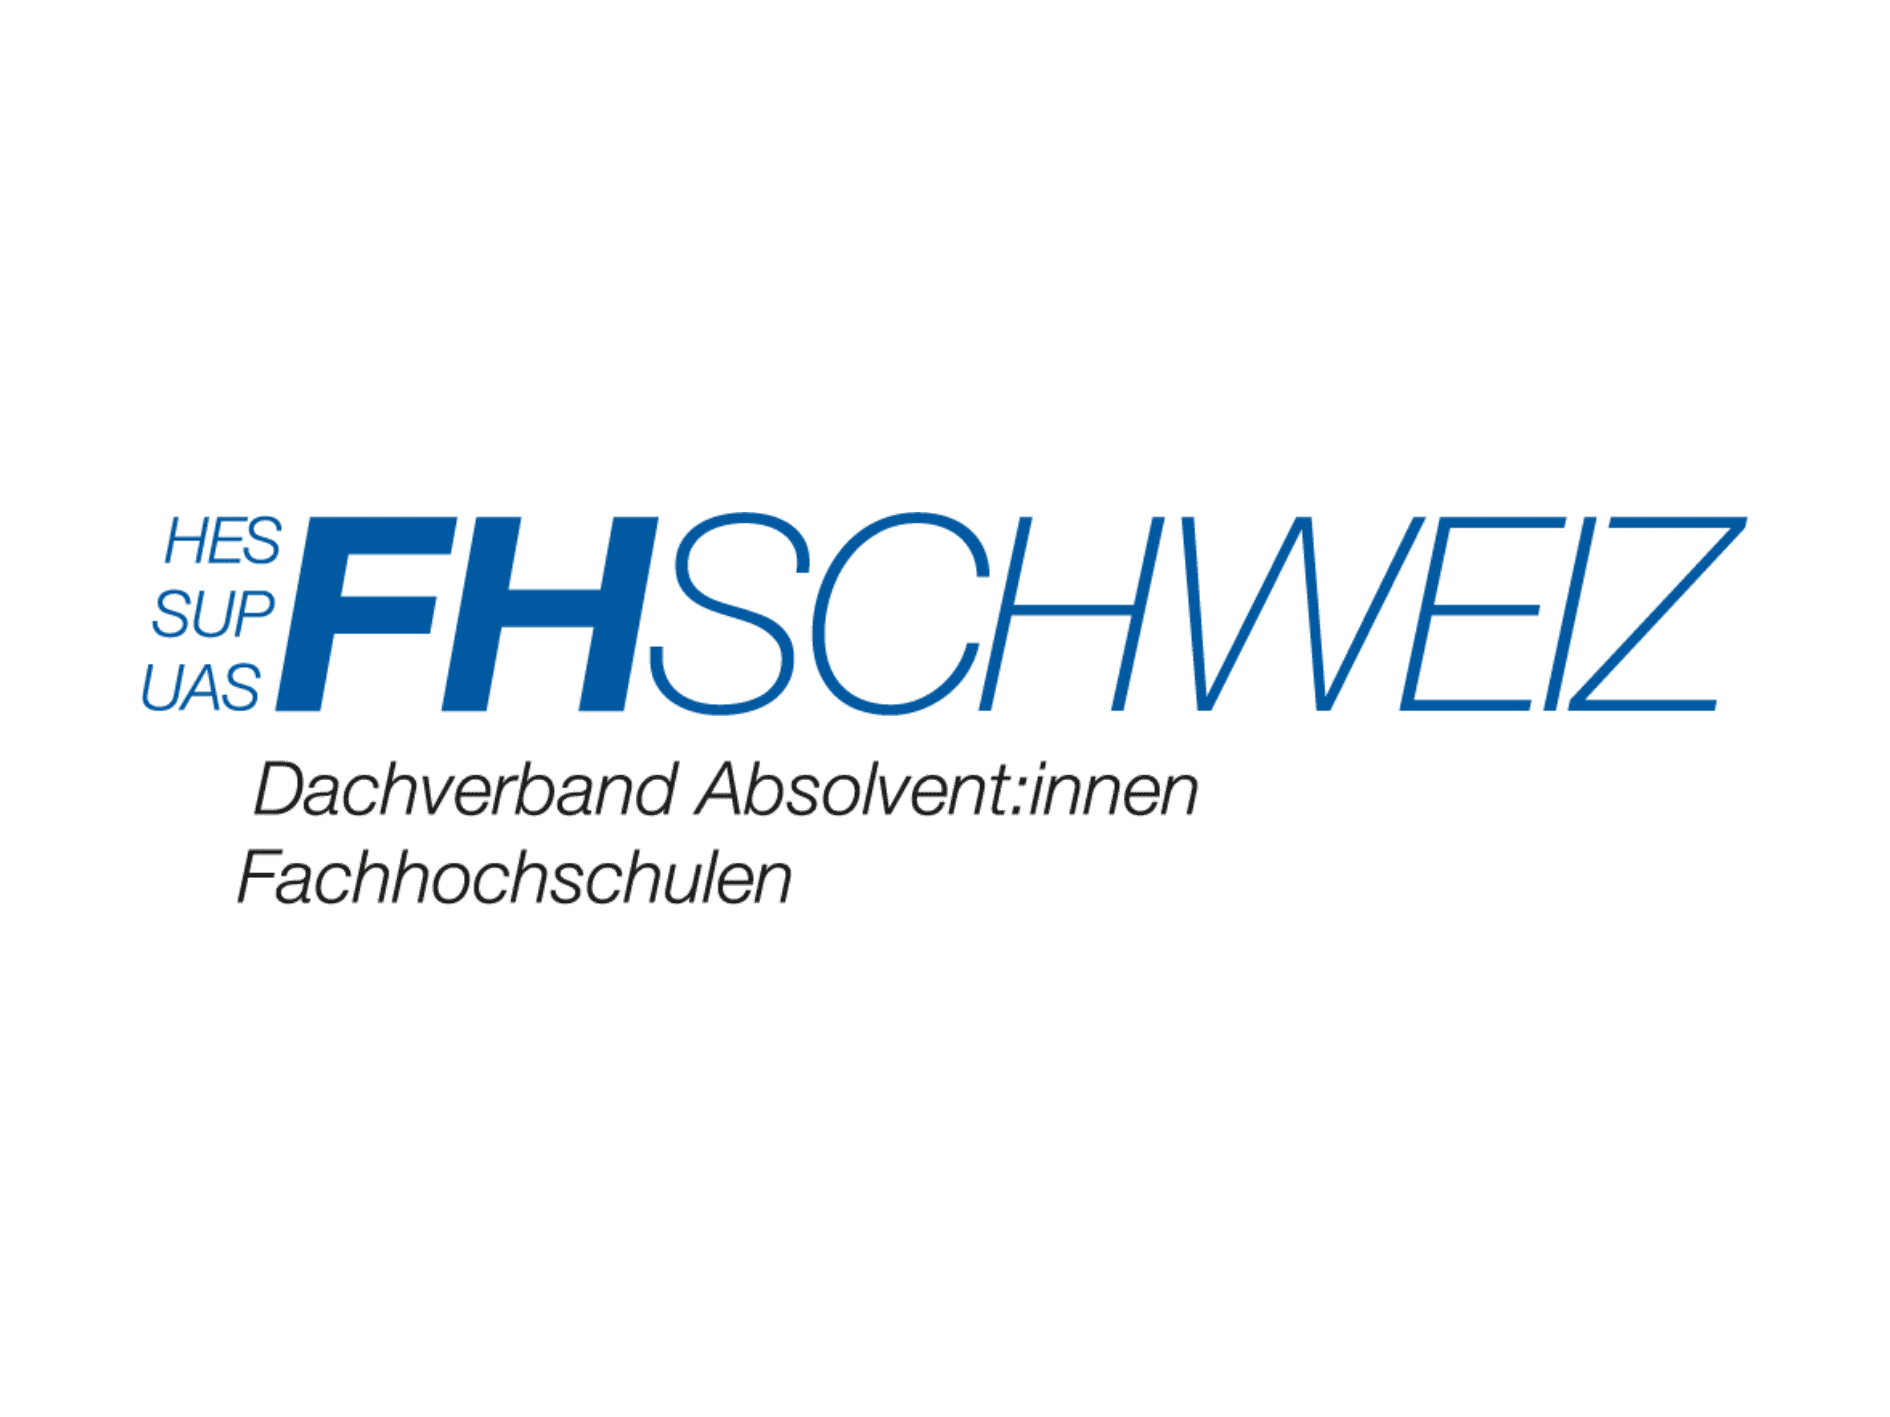 Marketing Schulung Partner FH Schweiz